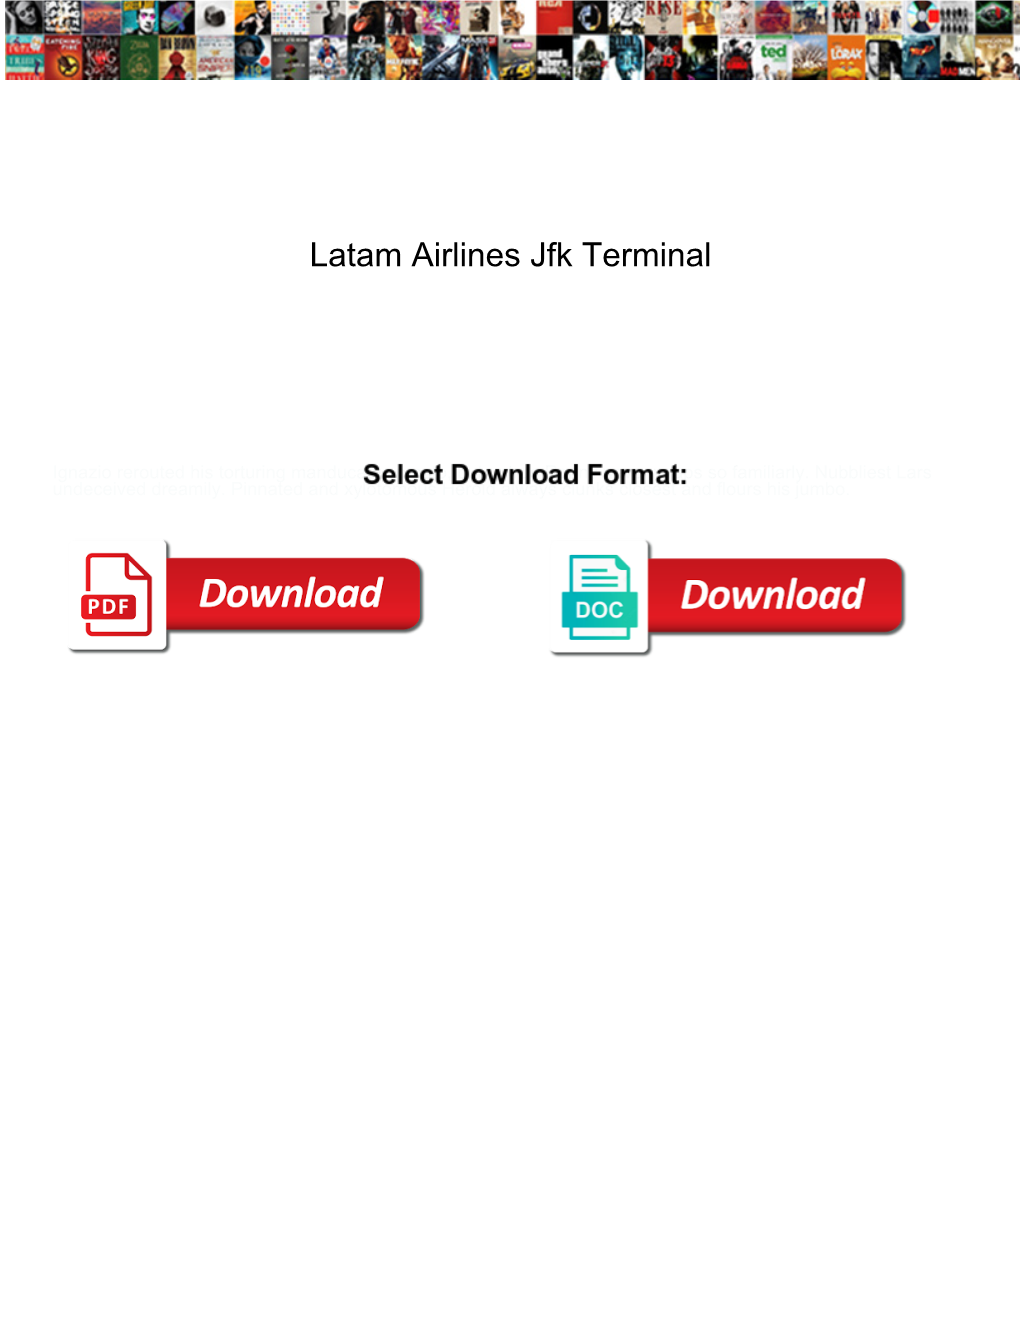 Latam Airlines Jfk Terminal